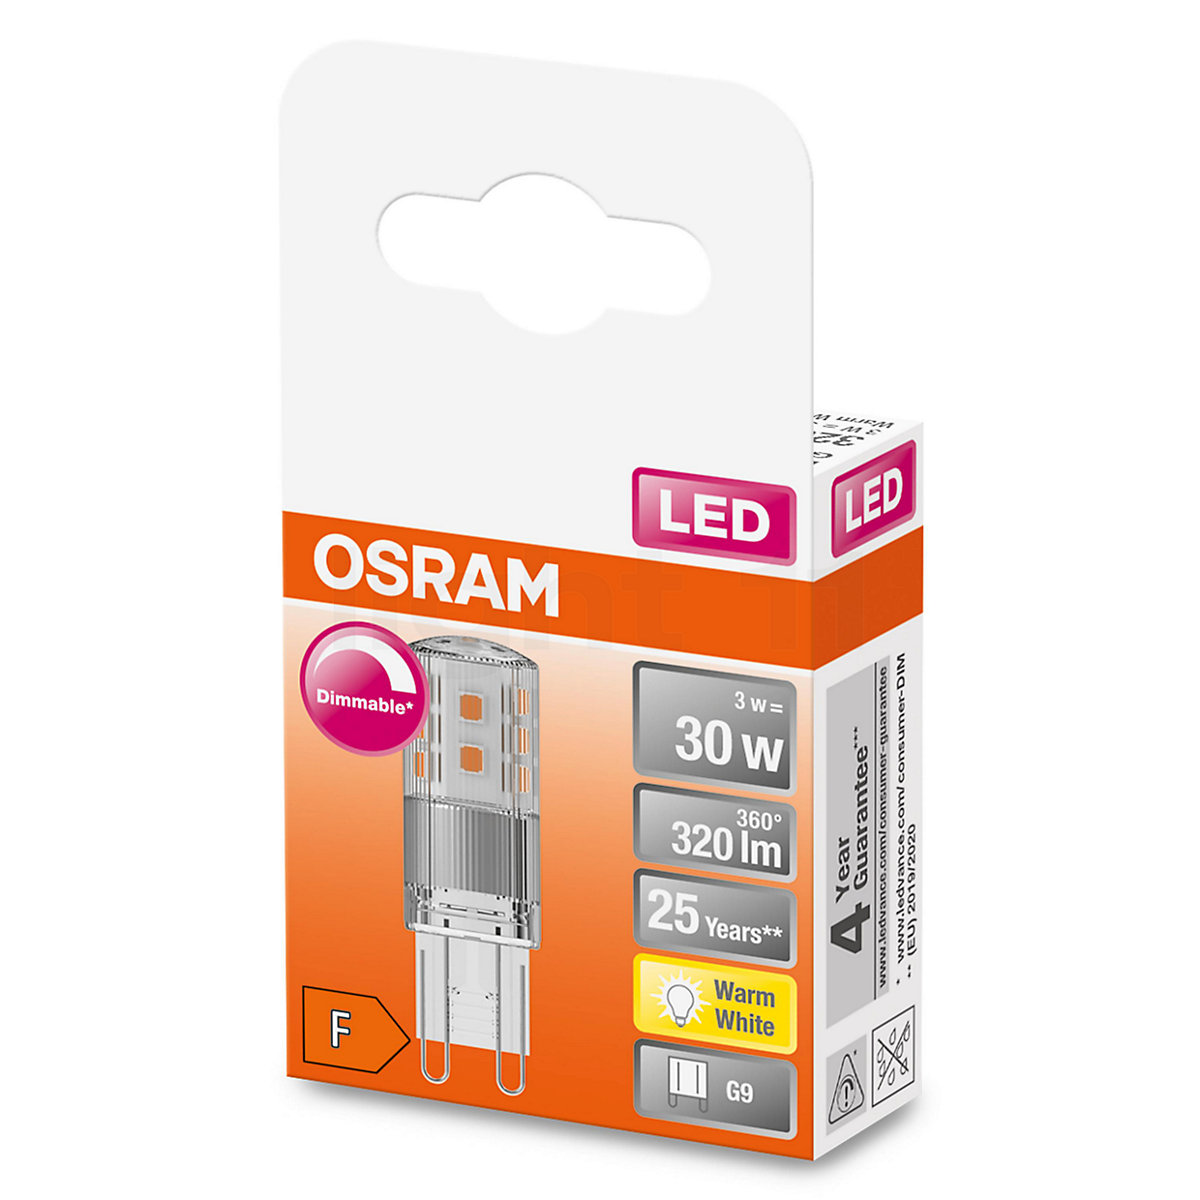 Invloed Uitsluiten Geweldig Buy Osram T20-dim 3W/c 827, G9 LED at light11.eu